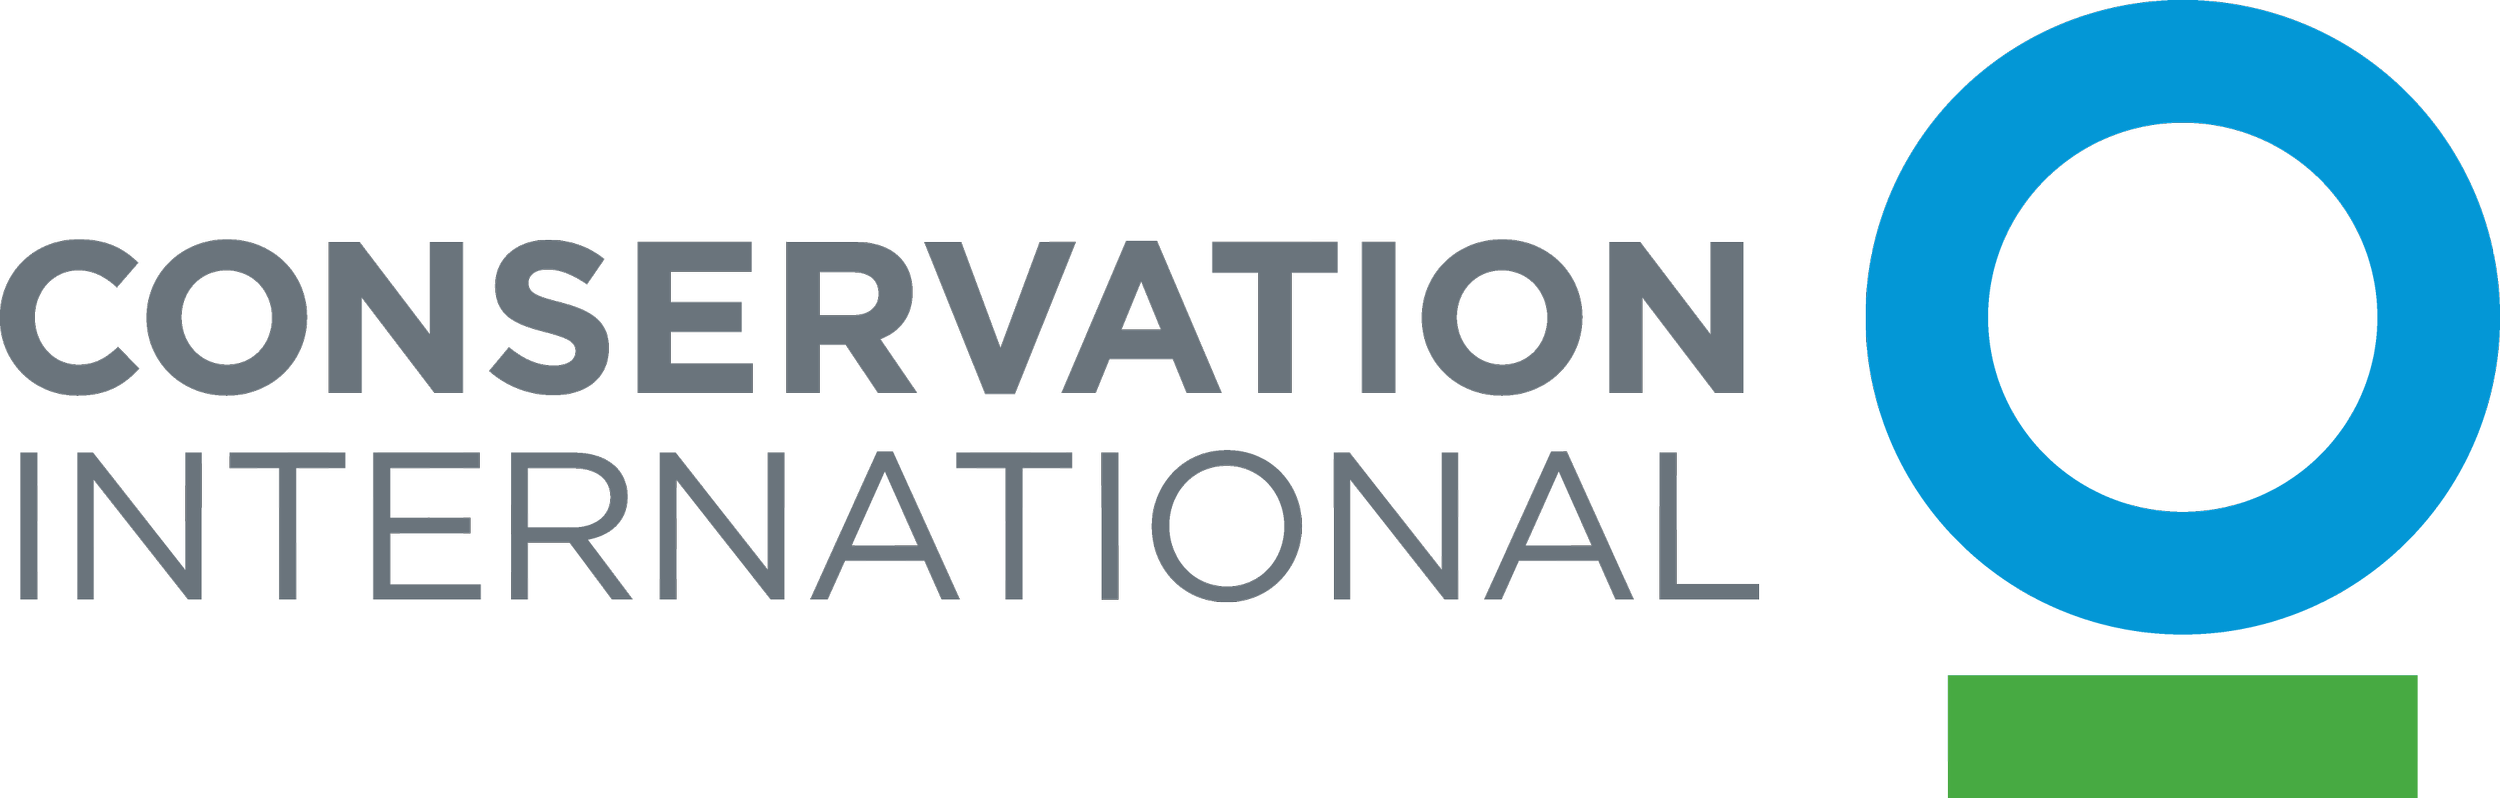 Conservation International - Grey Logo.png